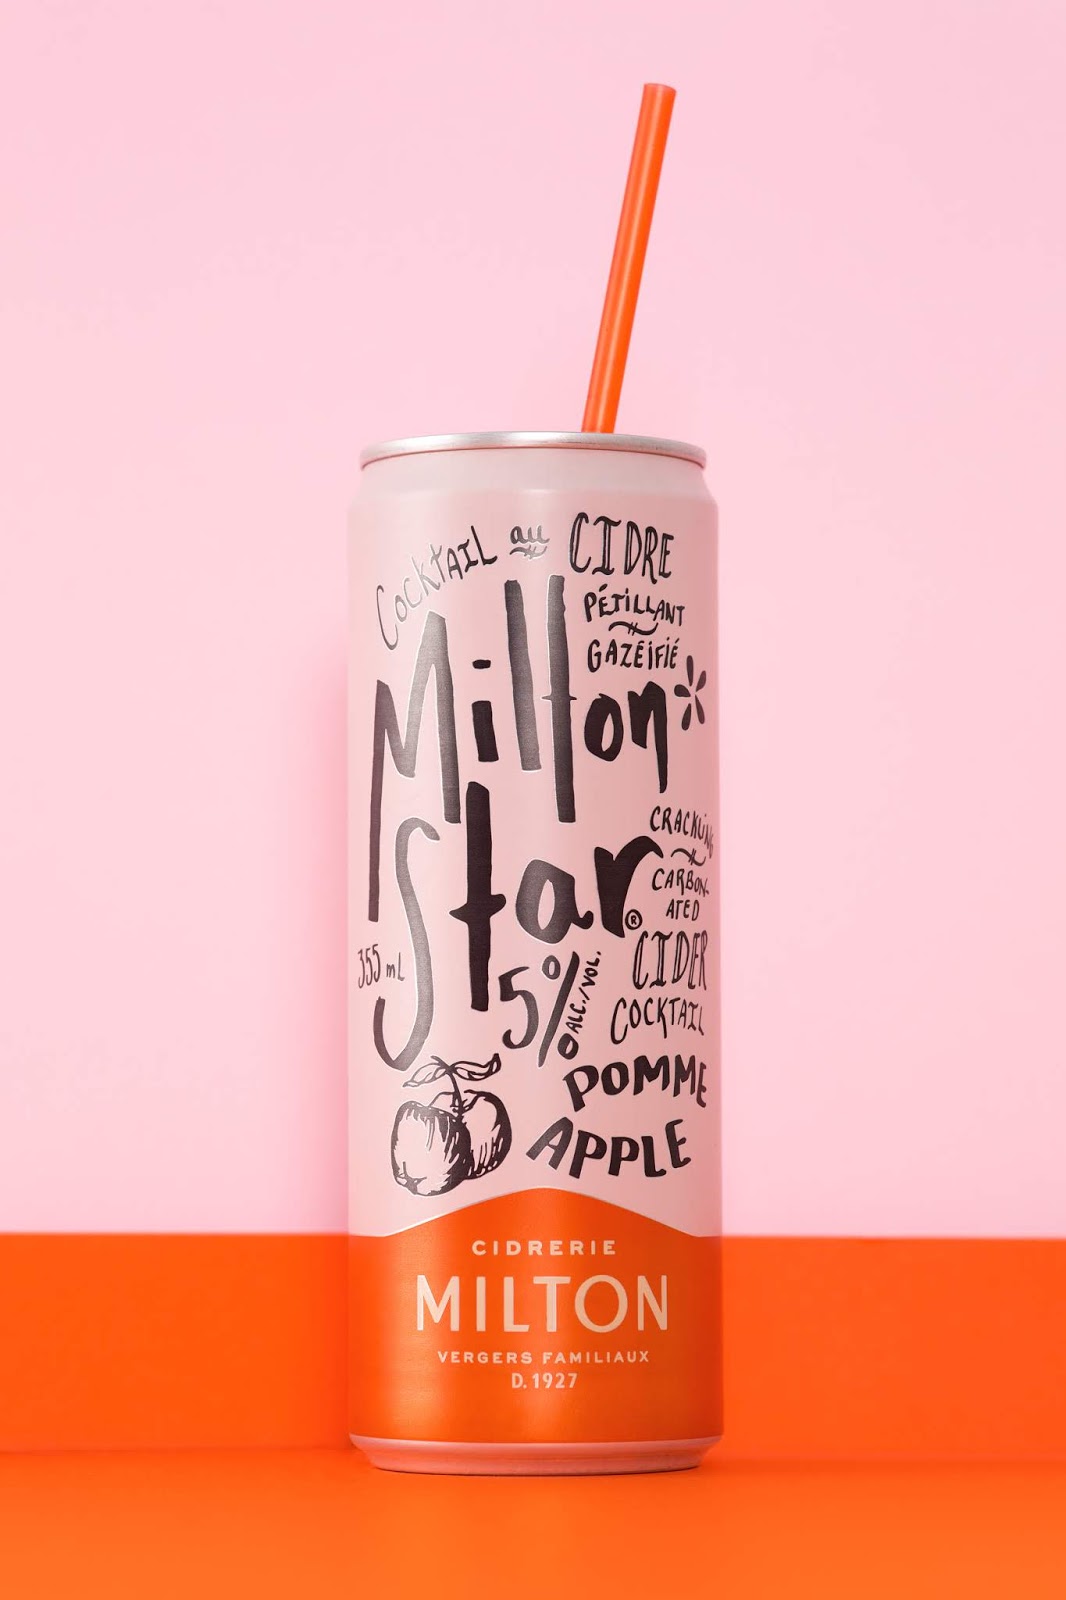 Milton Star罐装苹果酒包装设计